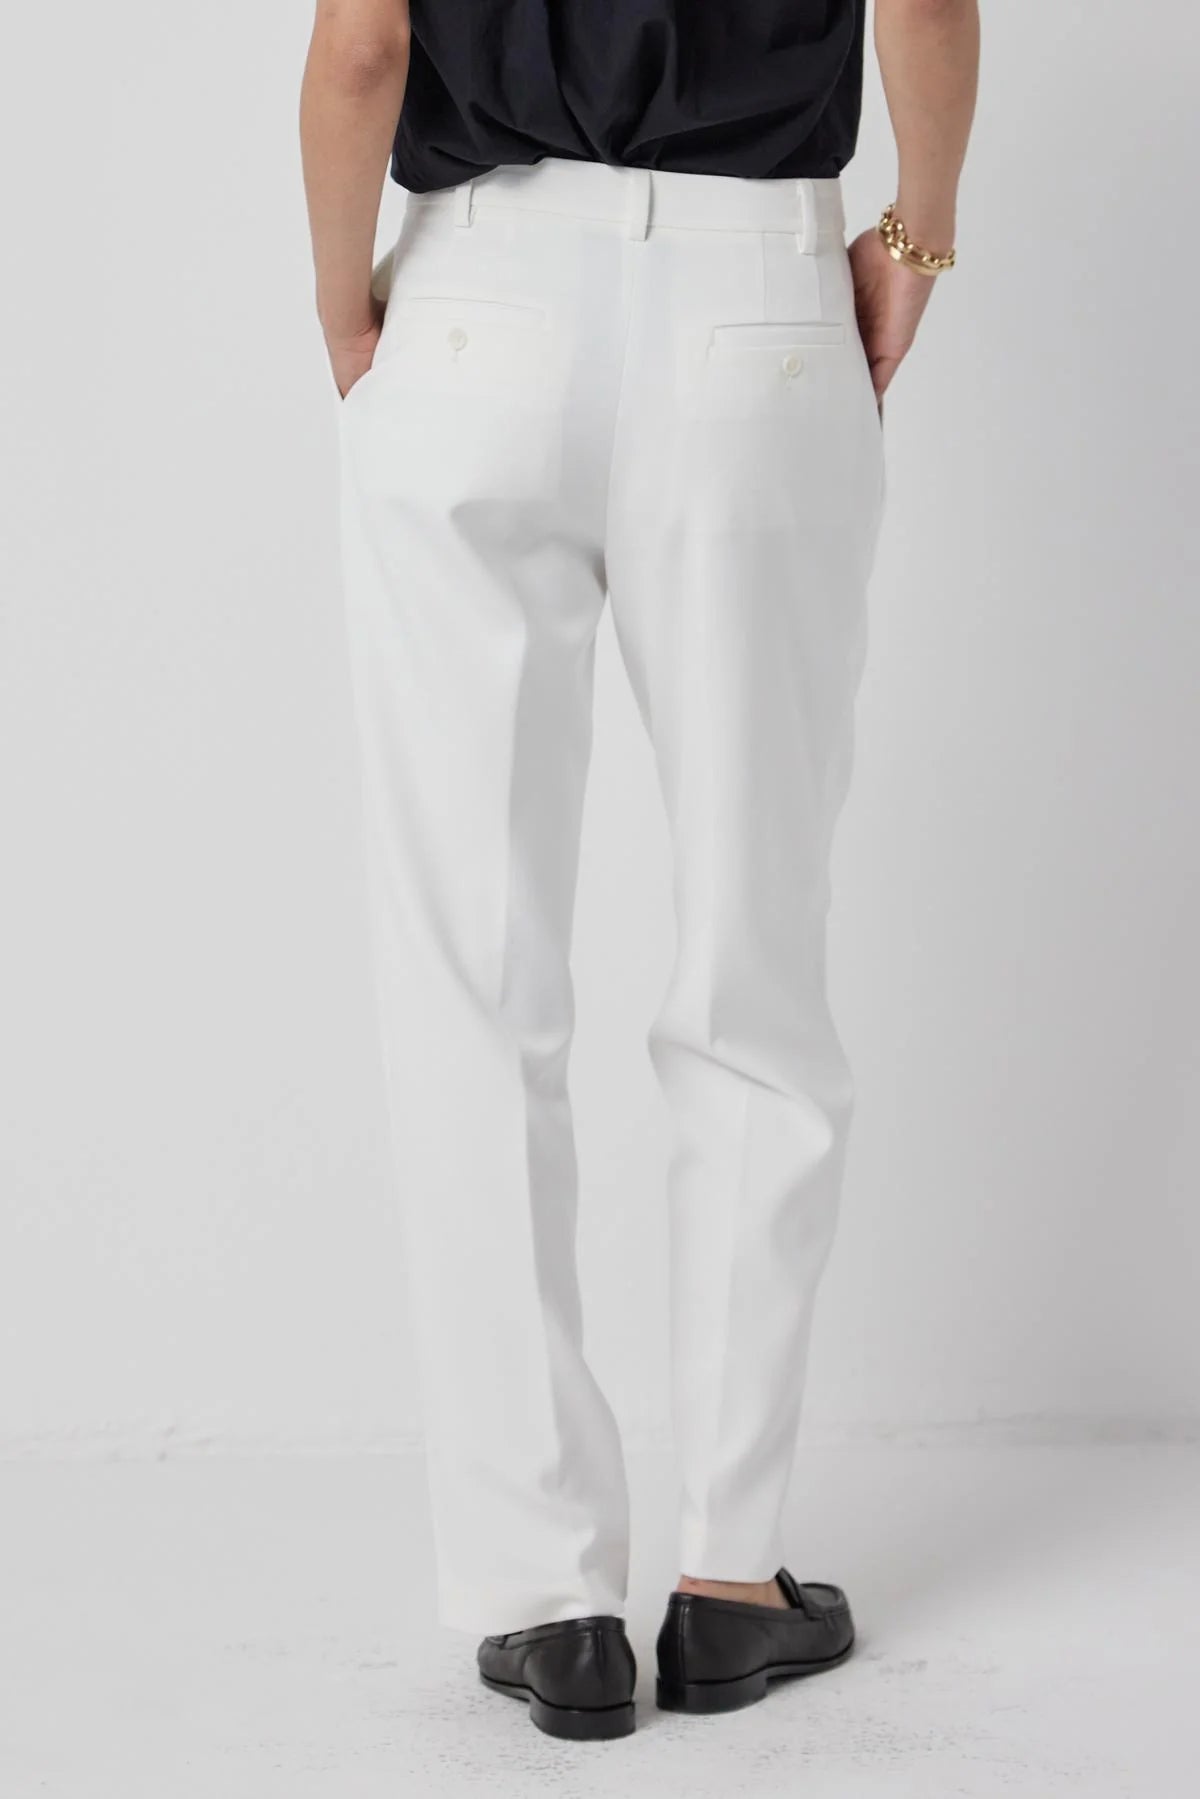 Velvet by Jenny Graham Bundy DS Soft Suiting Trouser